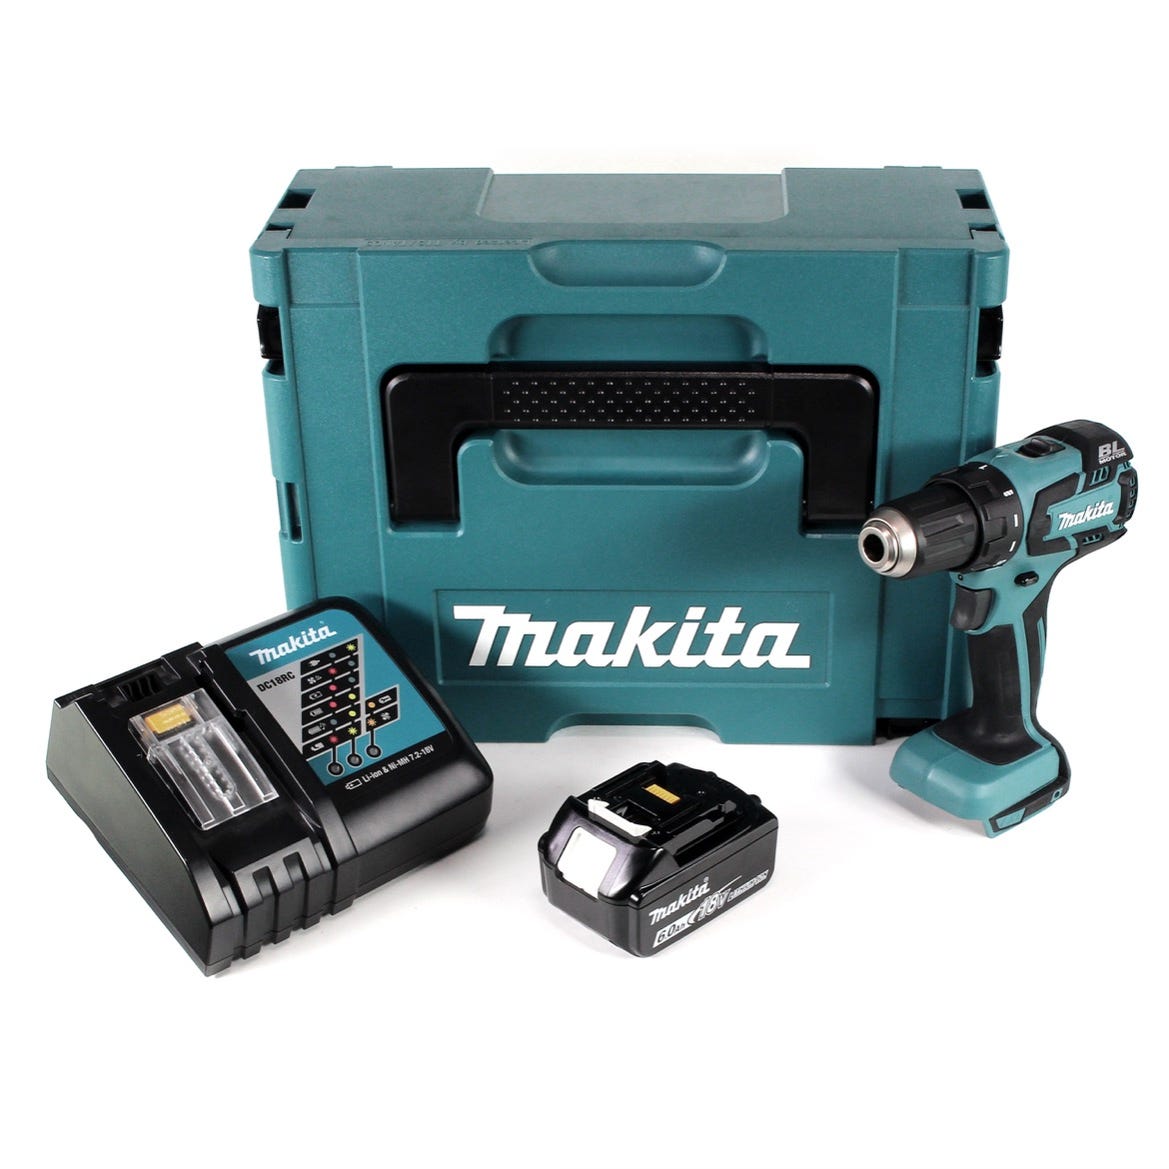 Makita DDF 459 RG1J 18 V Li-Ion Perceuse visseuse sans fil + Coffret Makpac + 1 x Batterie 6,0 Ah + Chargeur 0